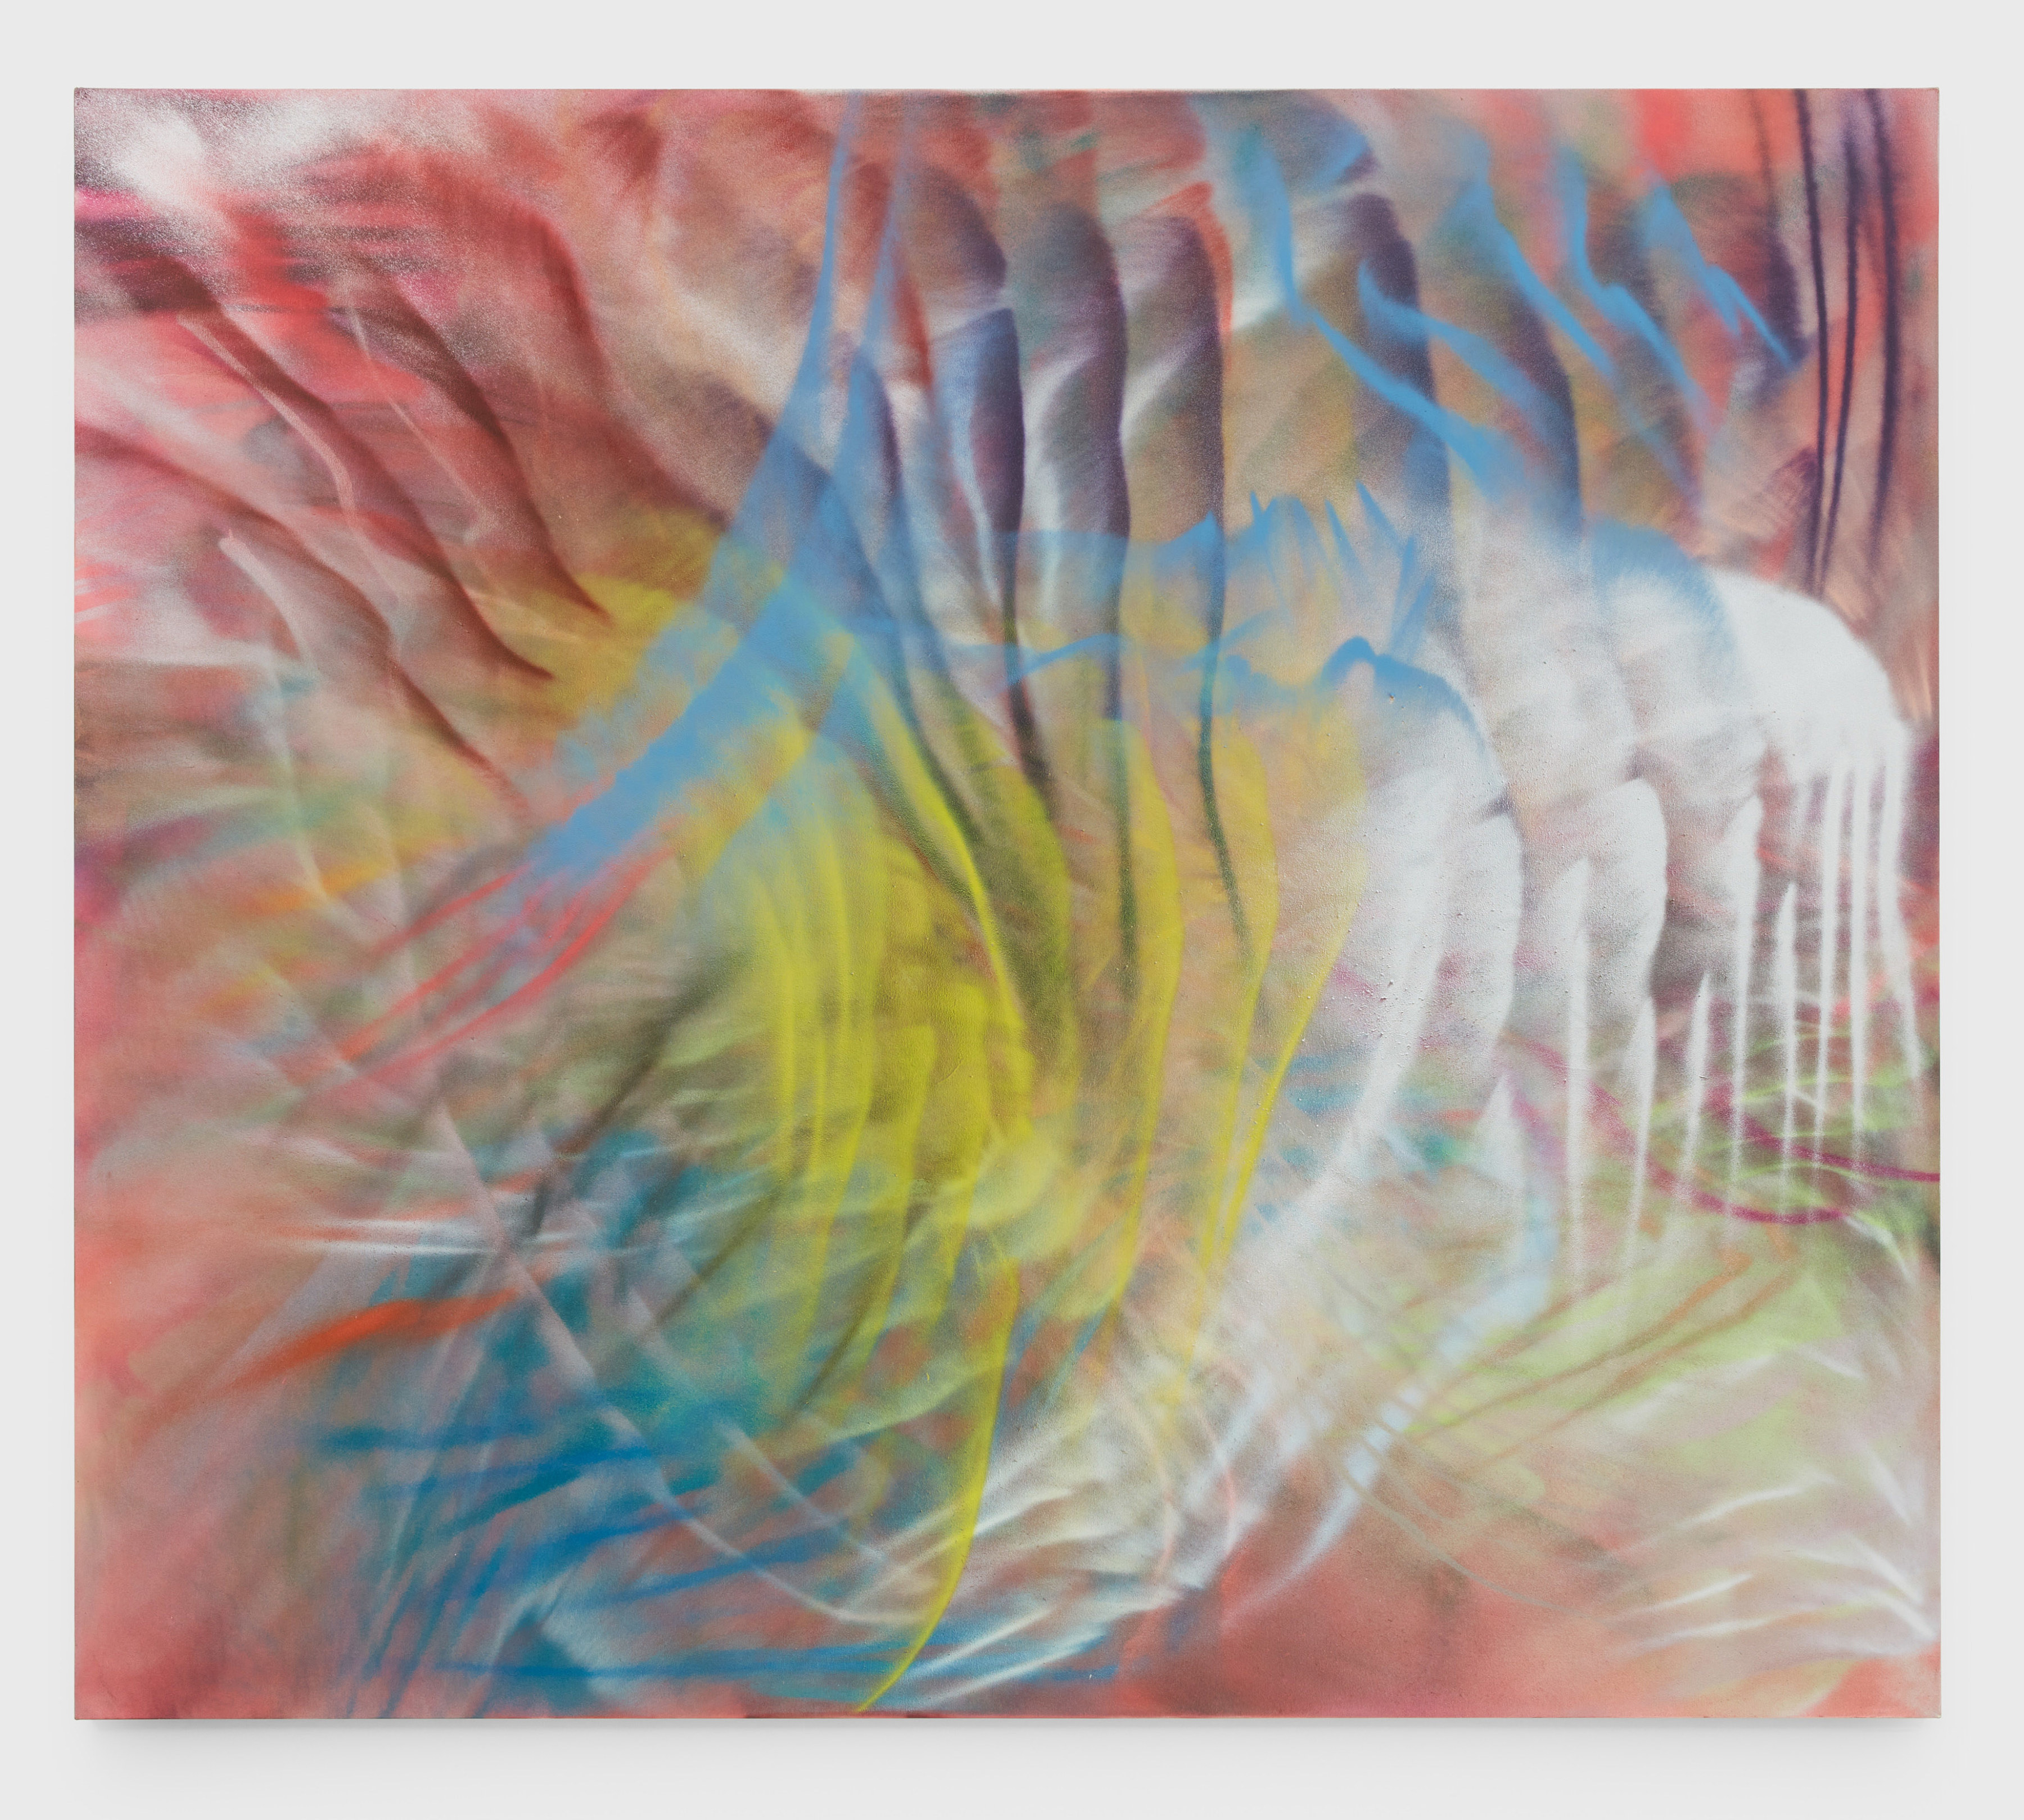 Andrea Marie&amp;nbsp;Breiling, Crossing for a Golden Blanket, 2021,&amp;nbsp;aerosol spray on canvas,&amp;nbsp;83 x 96 in (210.8 x 243.8 cm)